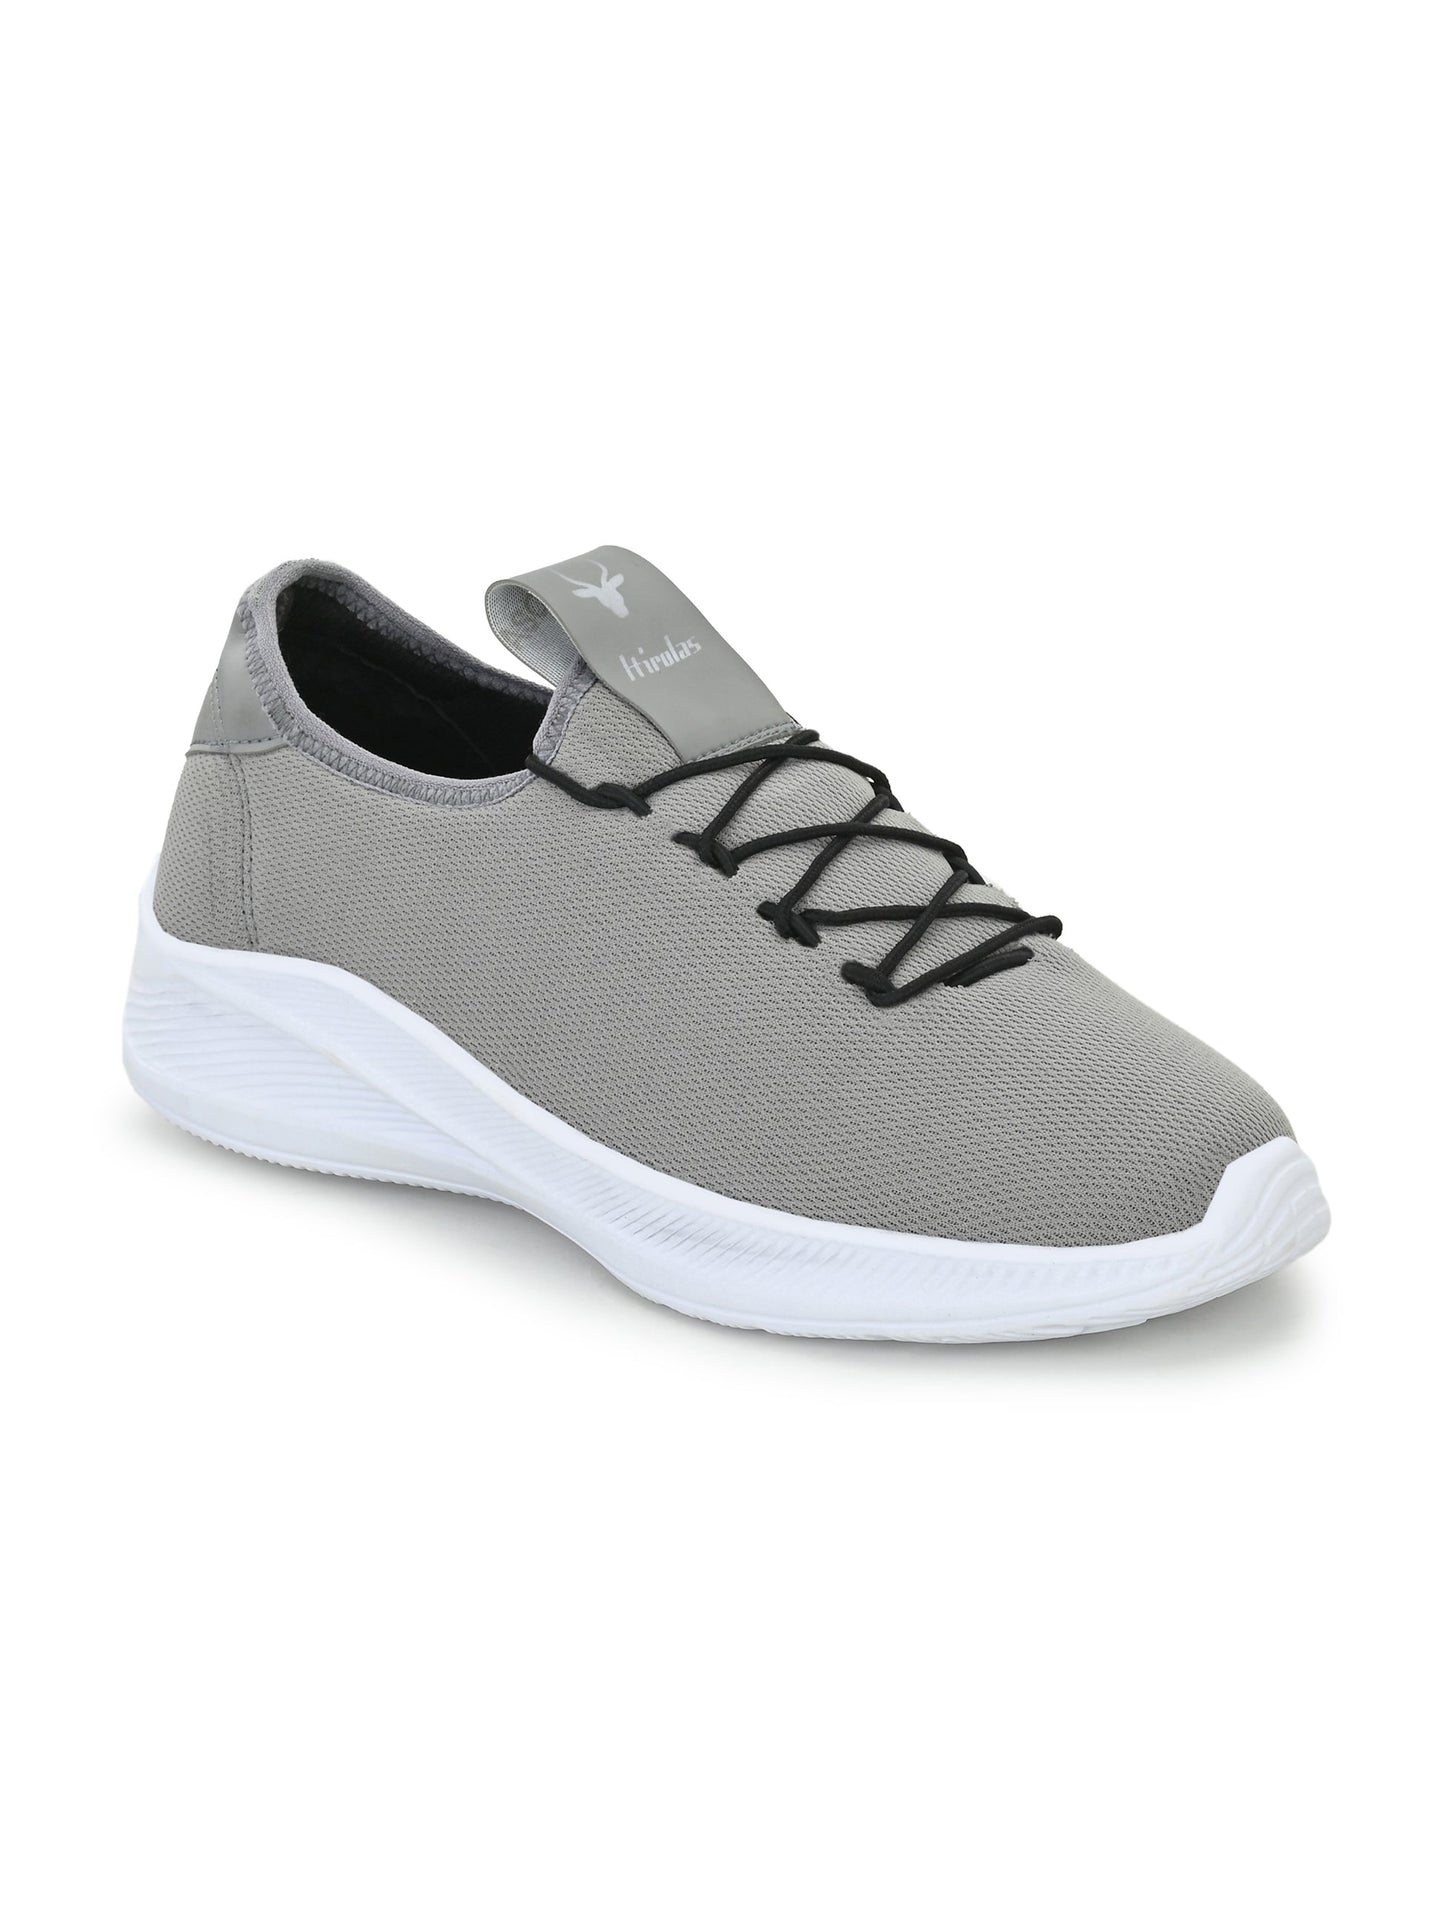 Hirolas® Men's Grey Lace Up Walking Sport Shoes (HRL1932GRY)